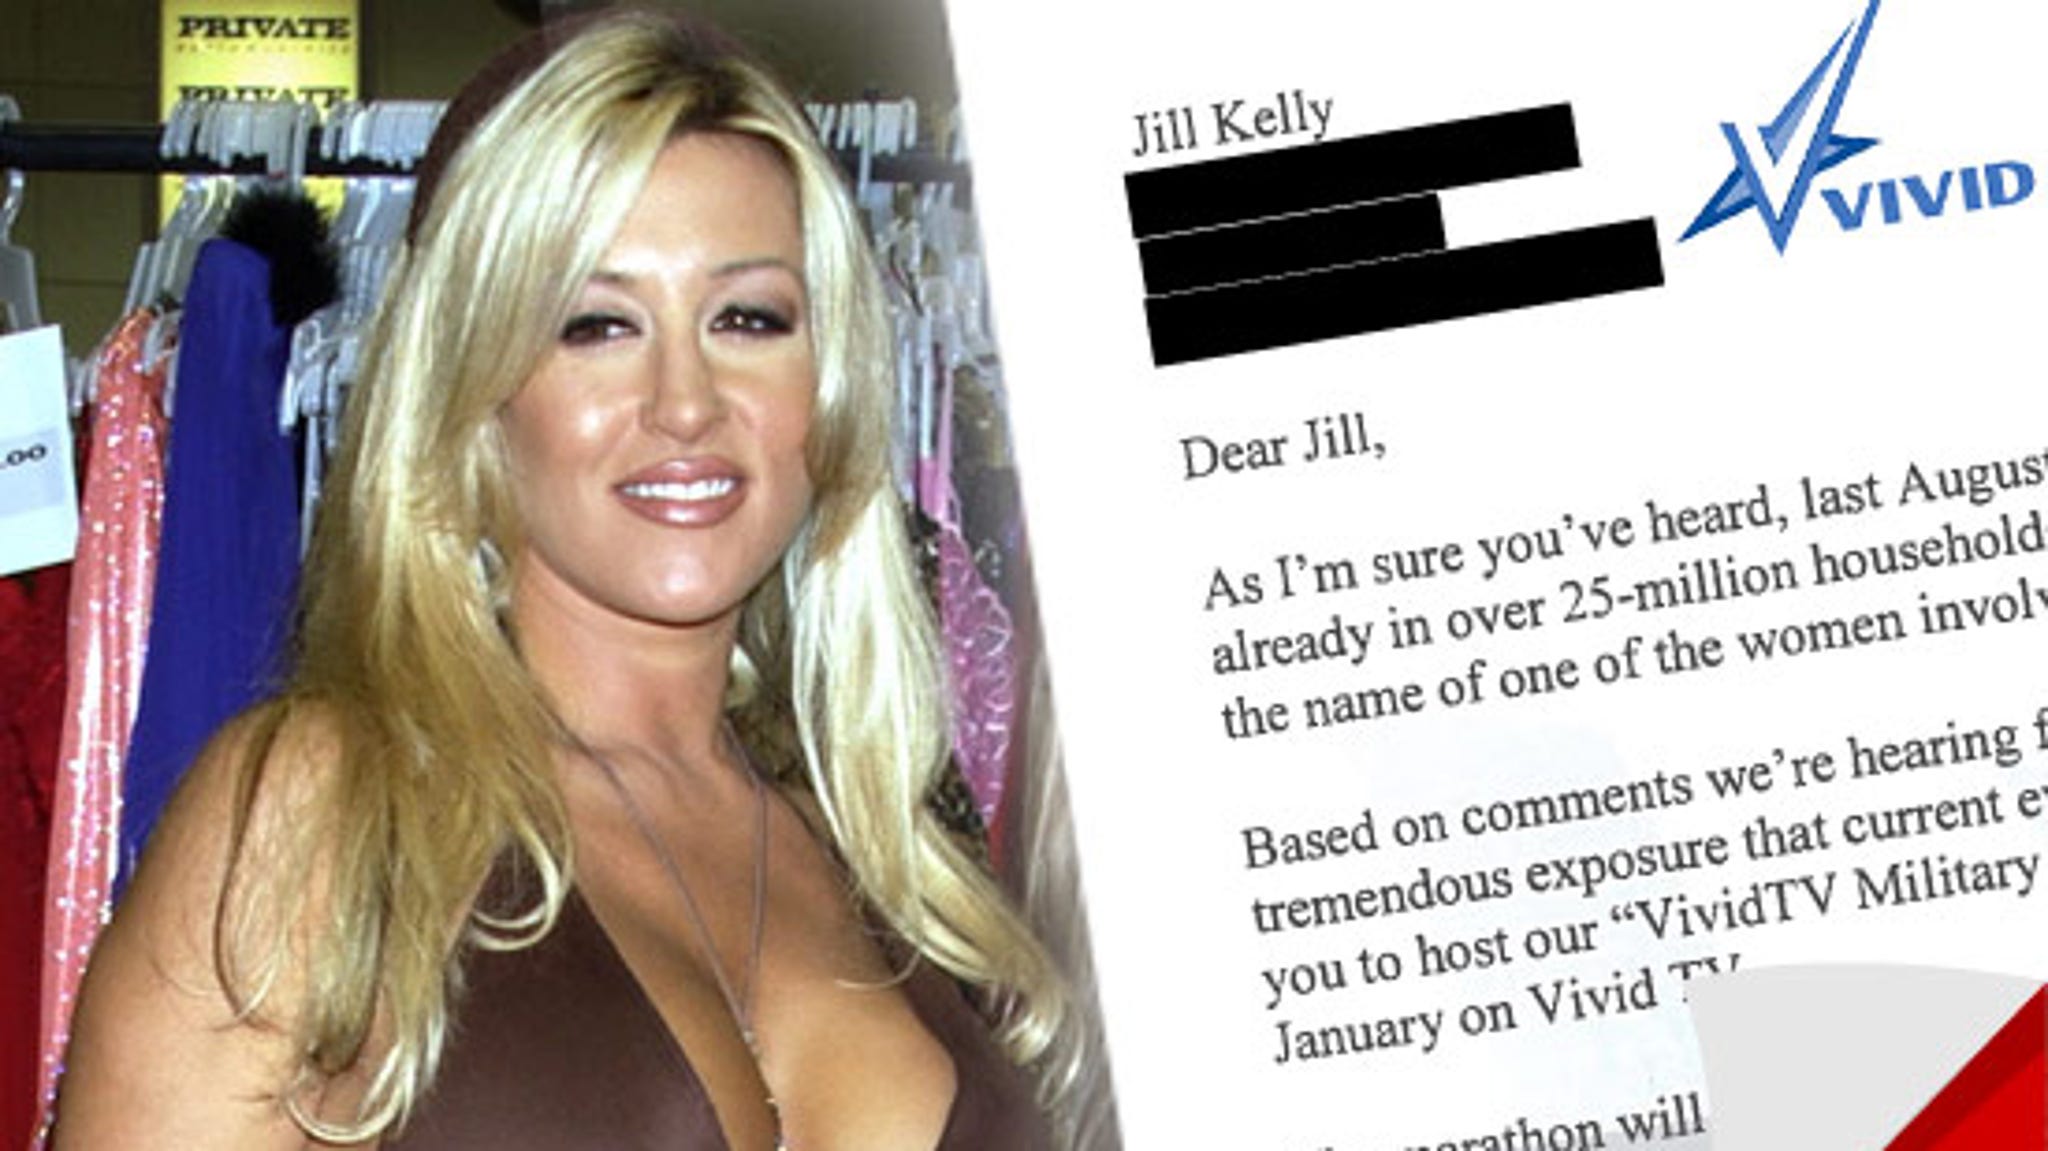 Jill Kelly Smoking Porn - Porn Star Jill Kelly -- General Petraeus Sex Scandal Got Me a Job Offer!